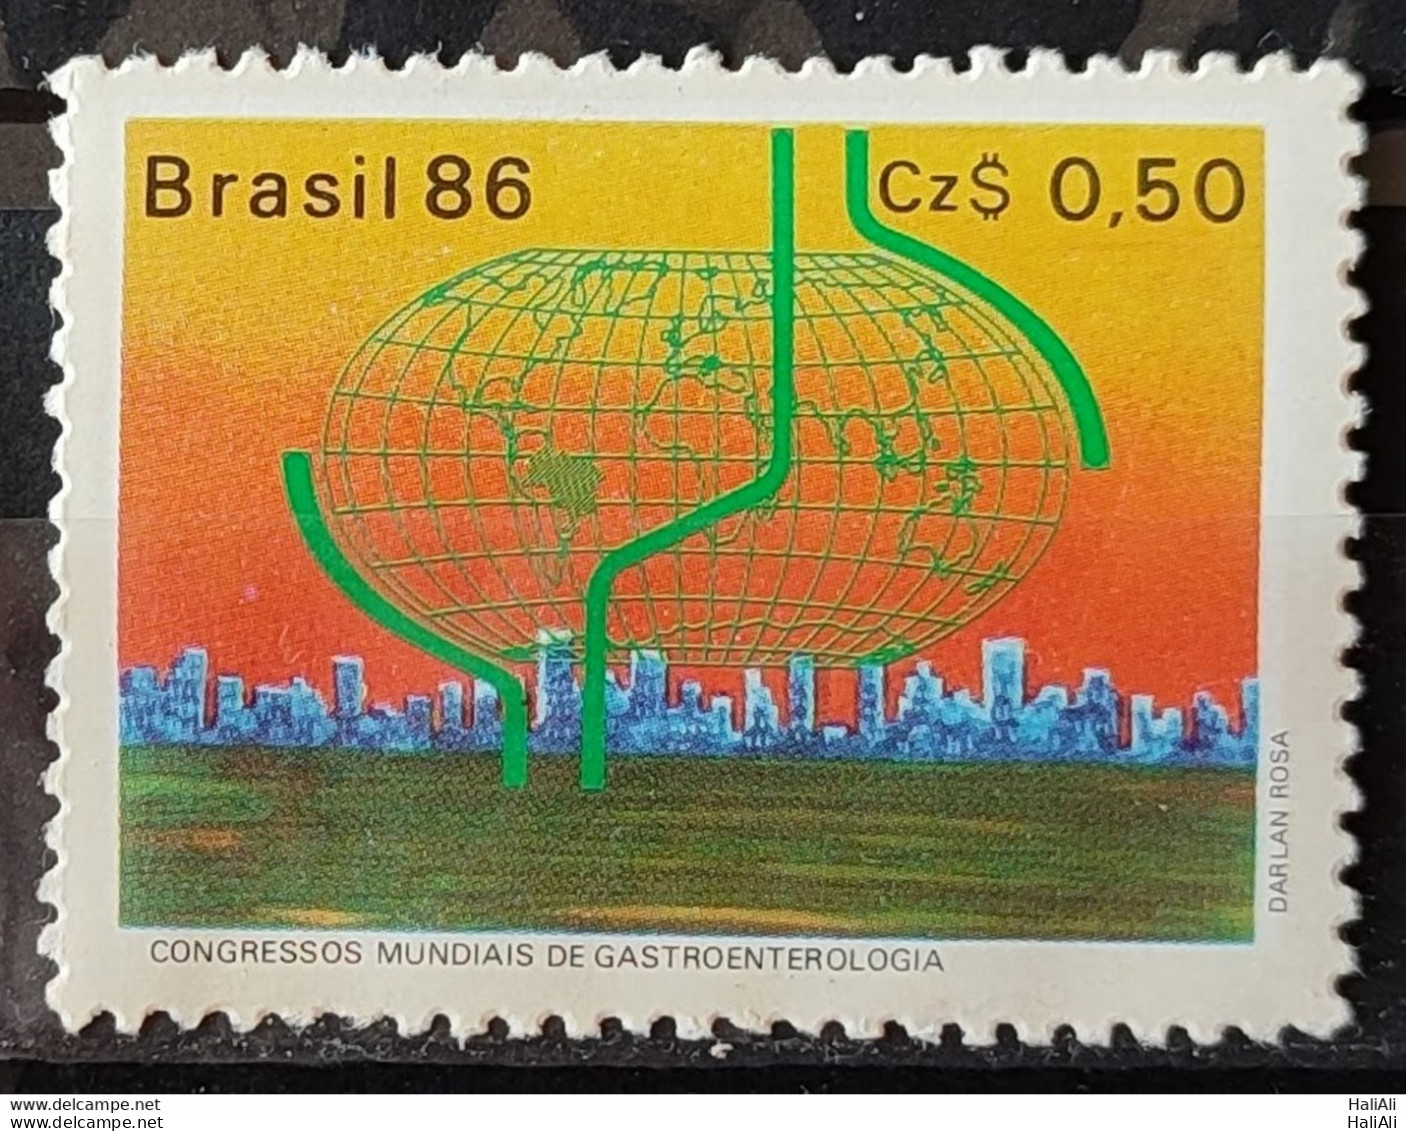 C 1520 Brazil Stamp Congress Of Gastroenterology Health 1986.jpg - Nuovi